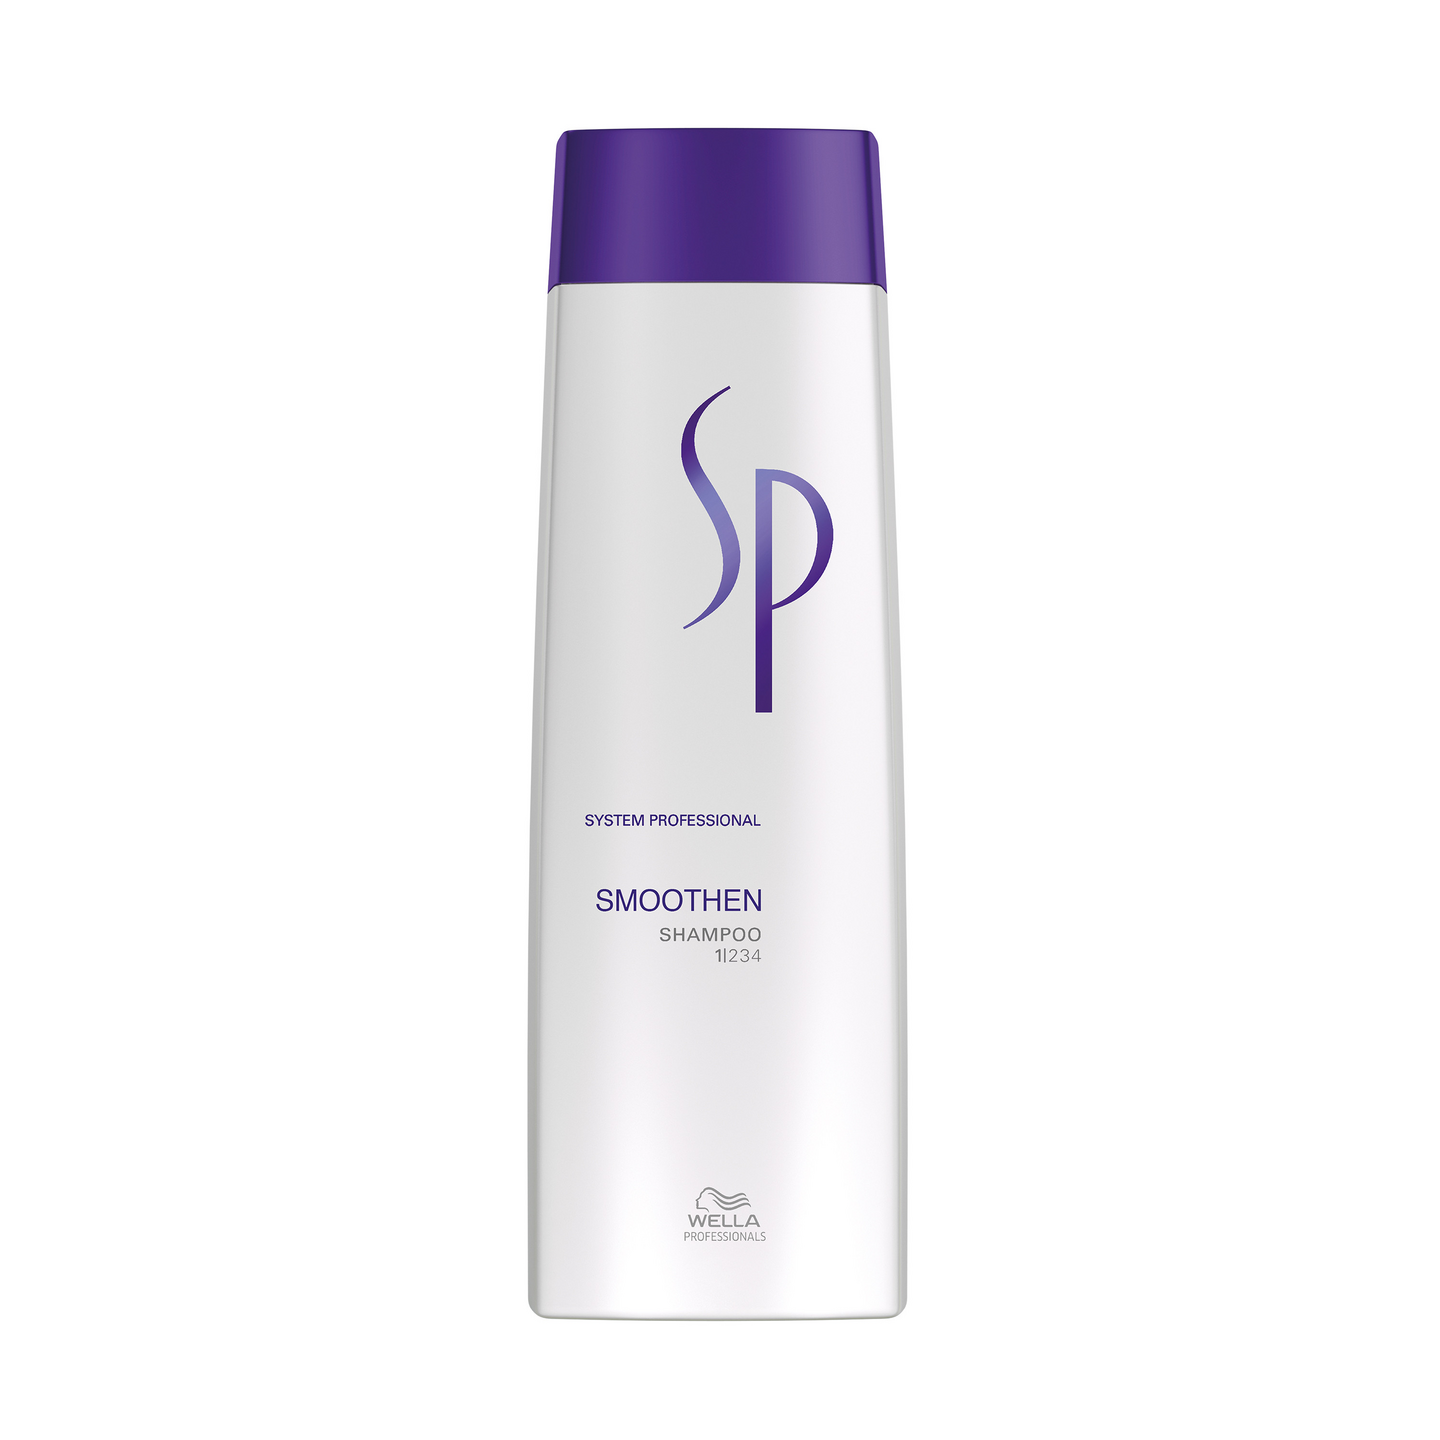 Wella Professionals SP shampoo 250ml Smoothen